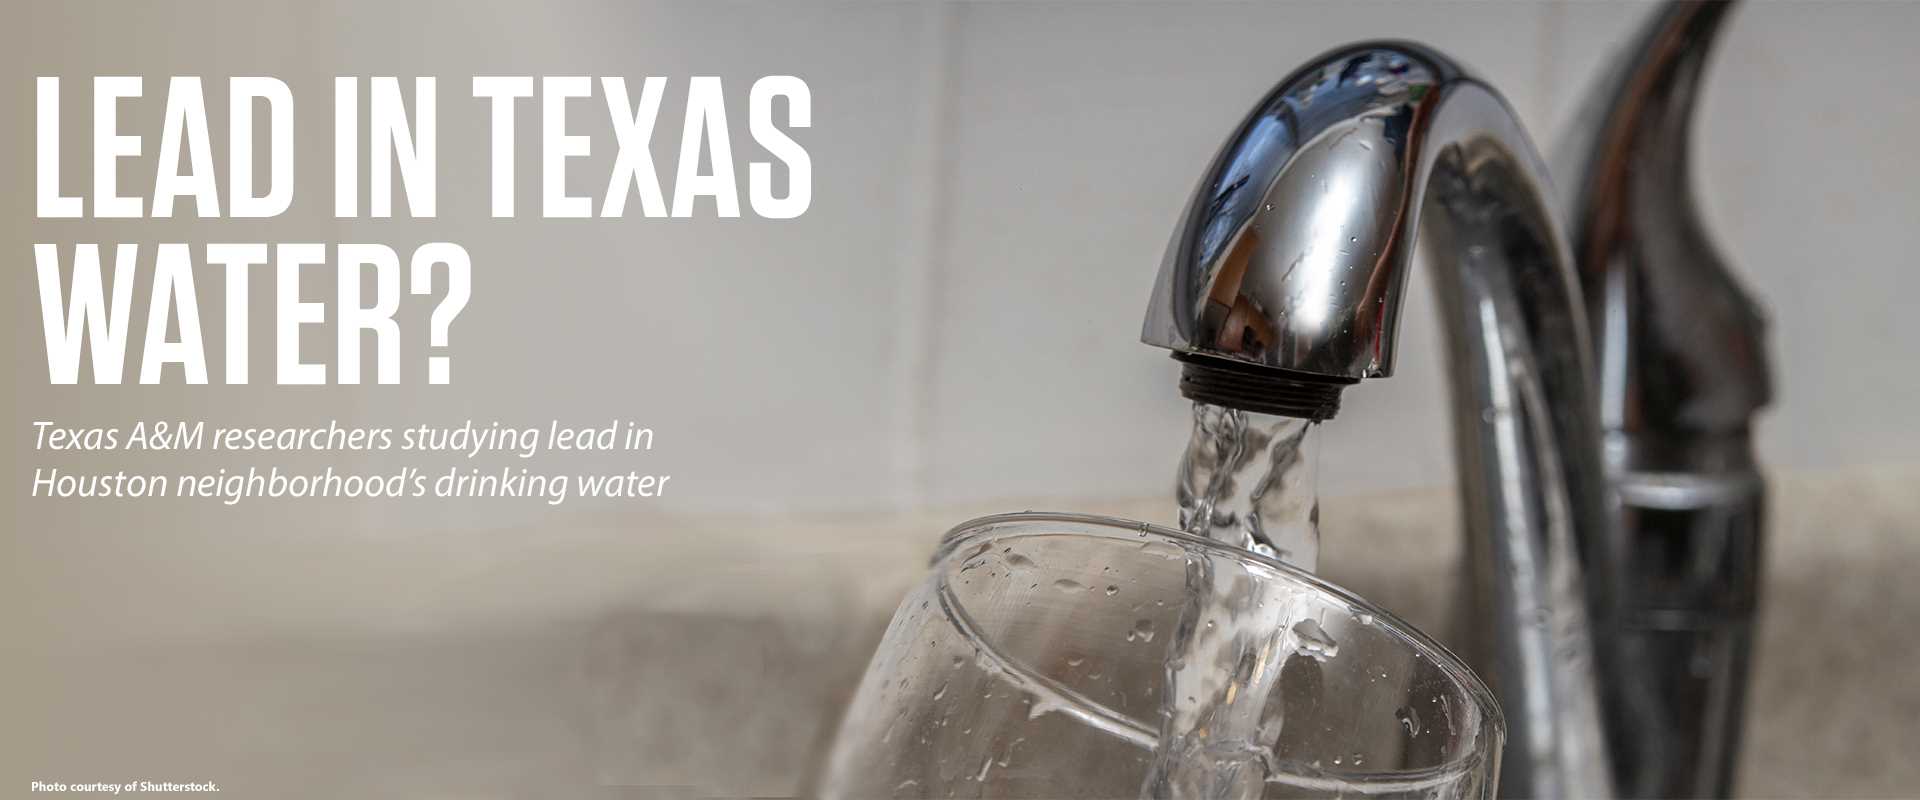 Lead in Texas Water?